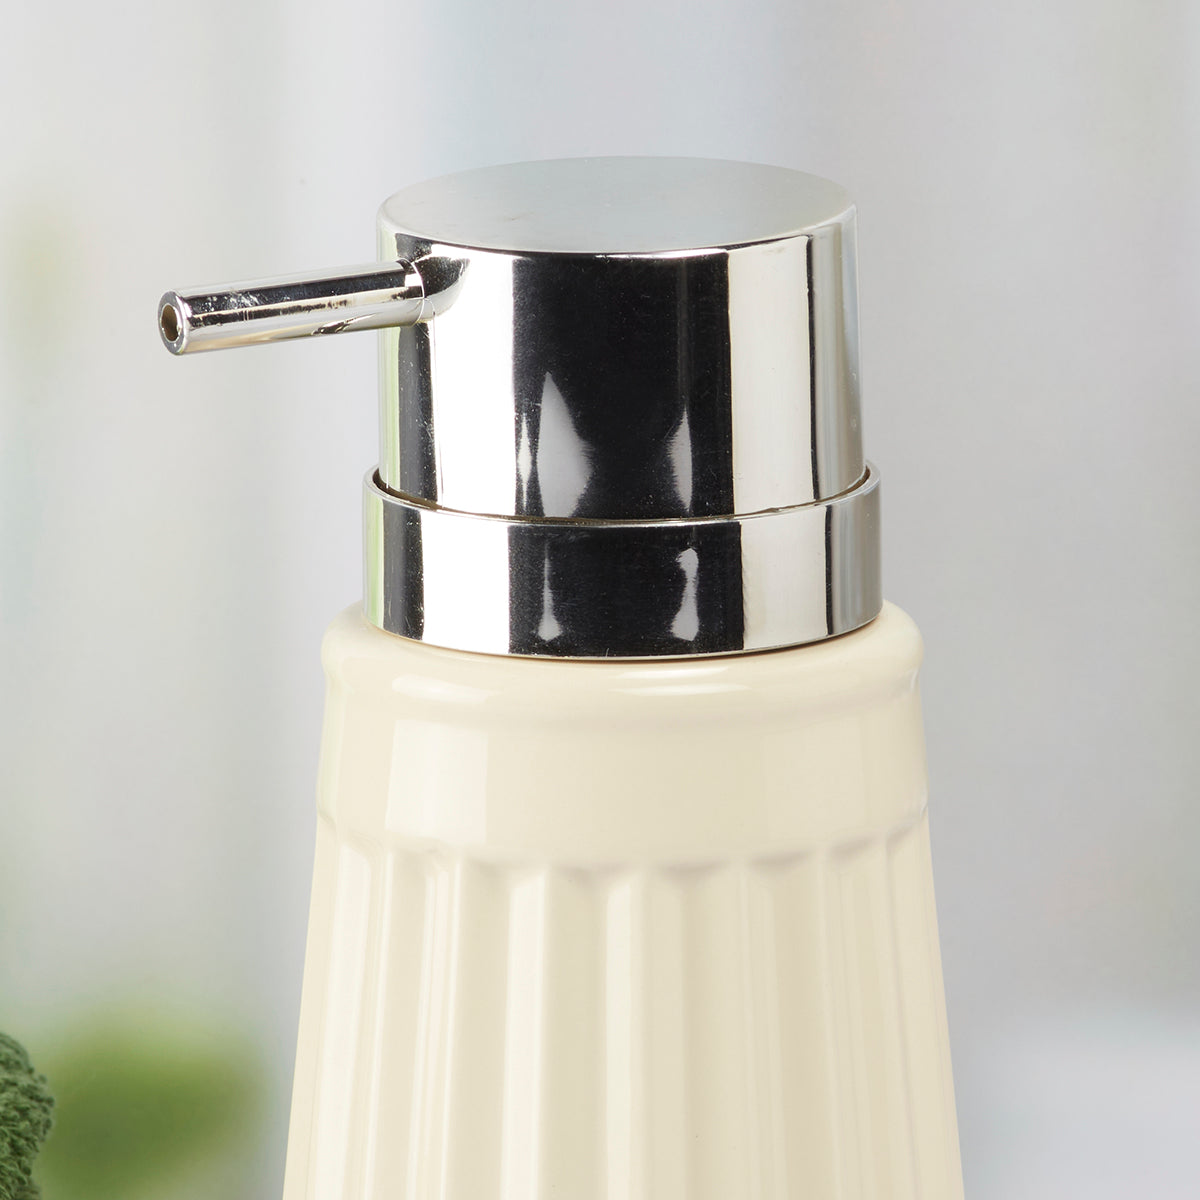 Ceramic Soap Dispenser Pump for Bathroom for Bath Gel, Lotion, Shampoo (7981)